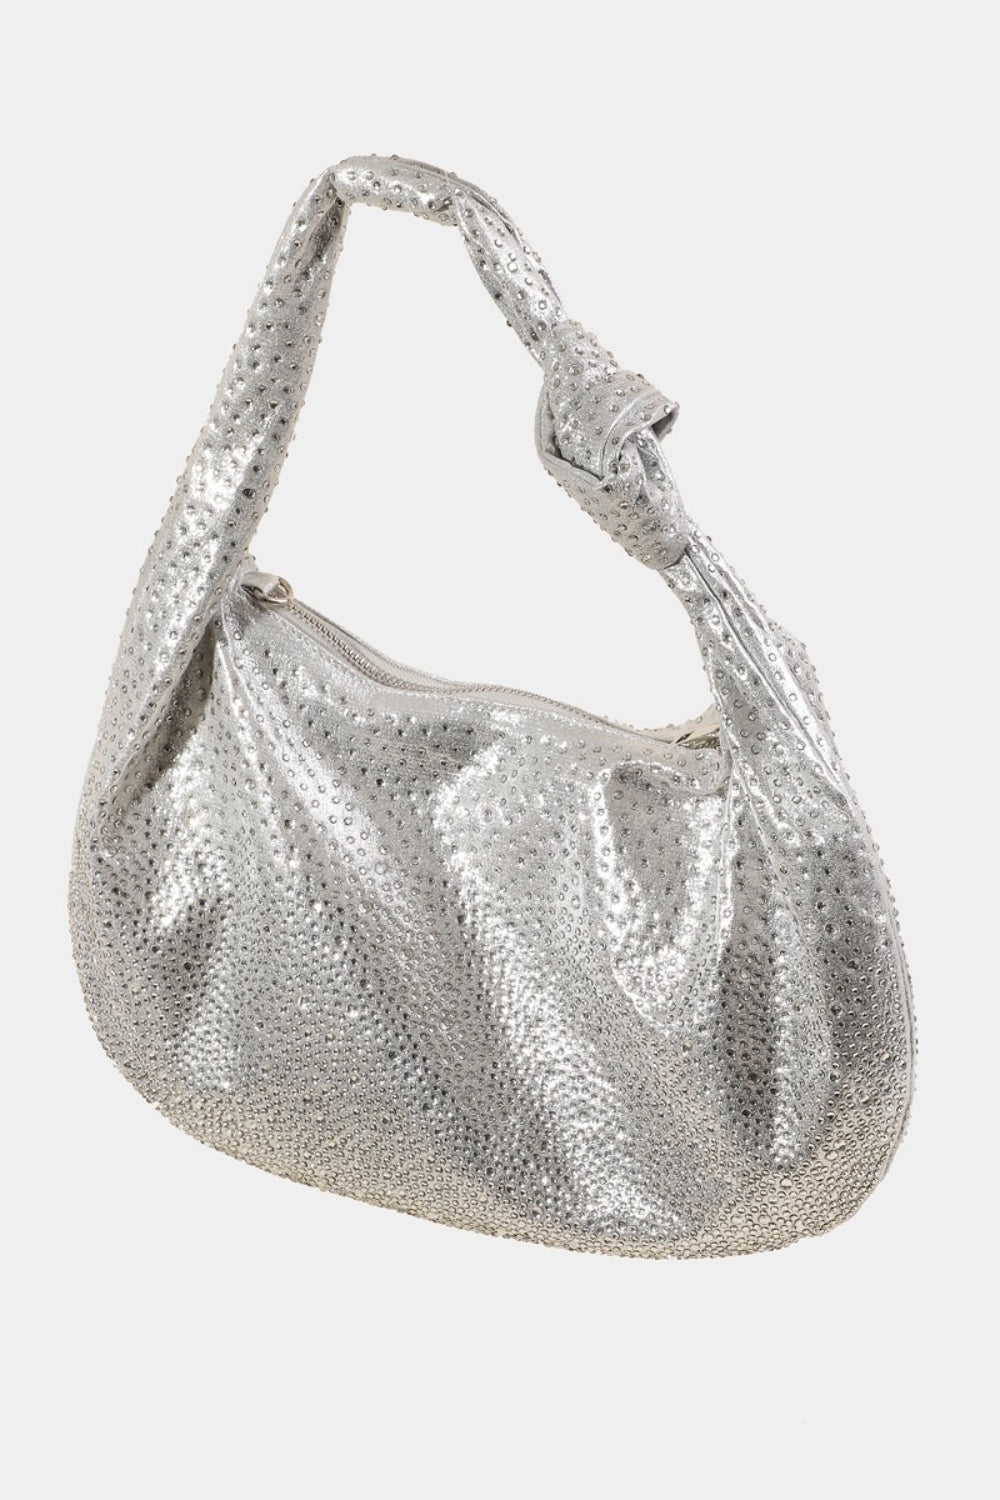 Rhinestone Studded Handbag